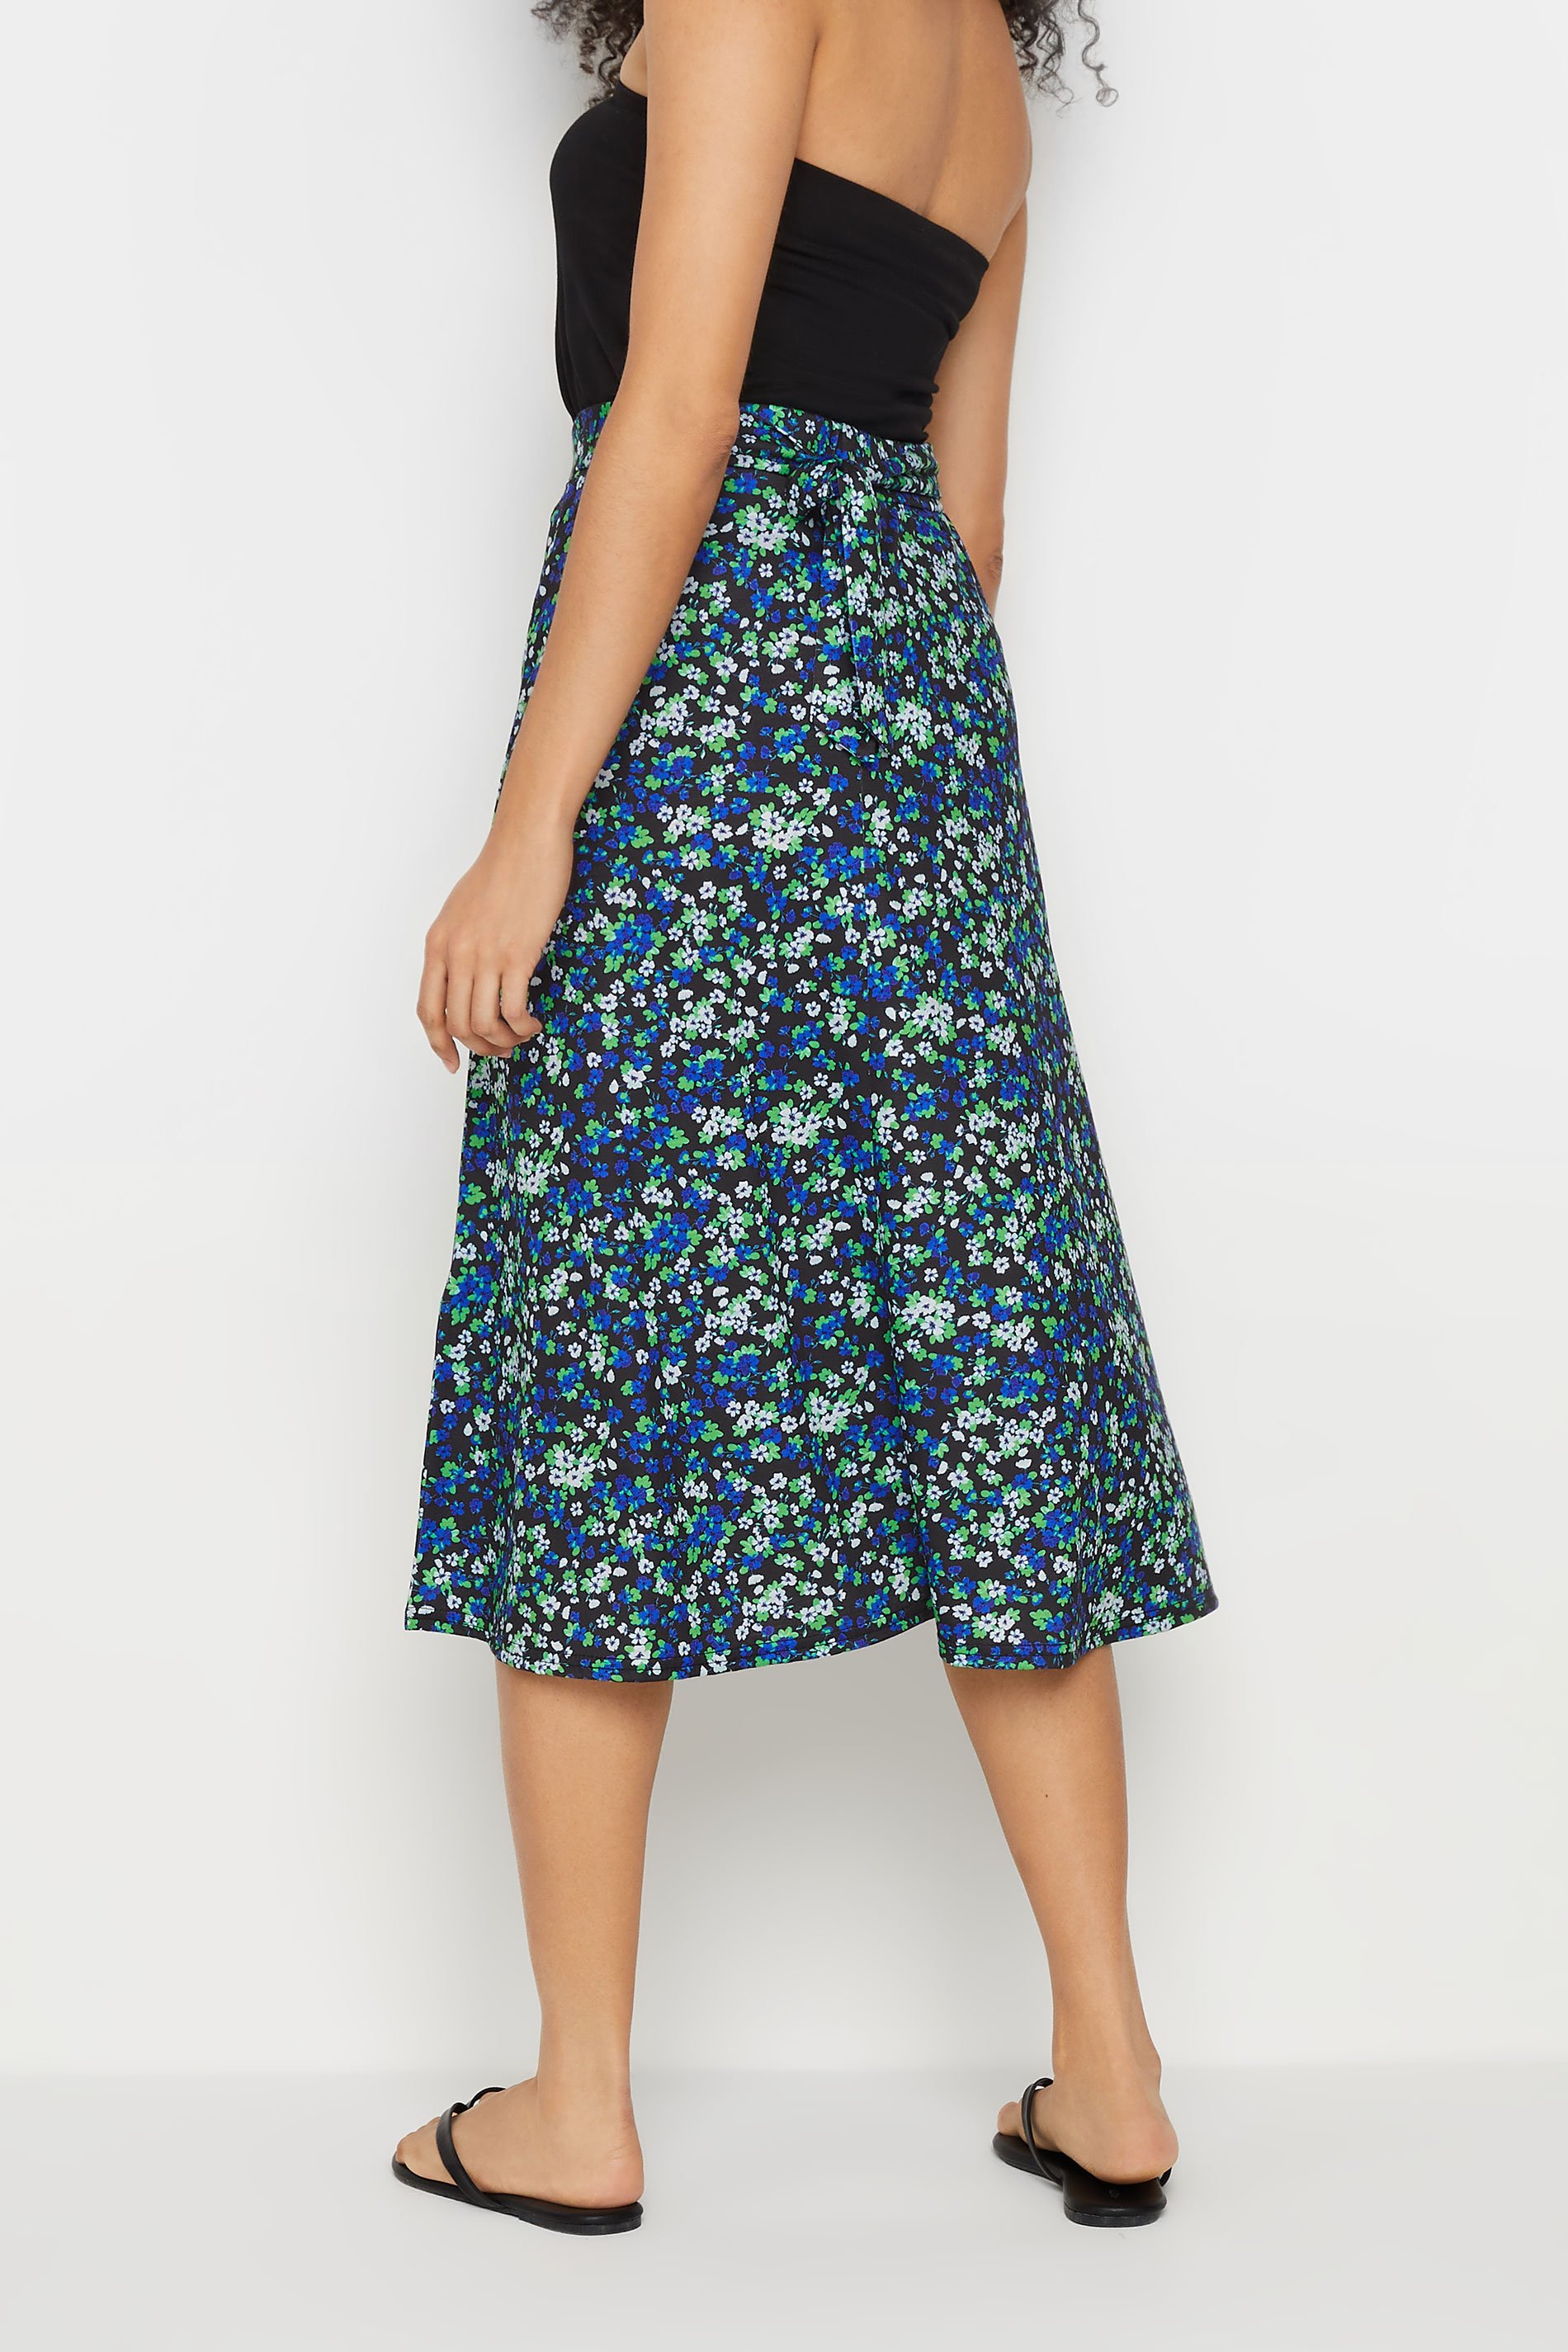 M&Co Black Ditsy Floral Print Tie Waist Skirt | M&Co 3